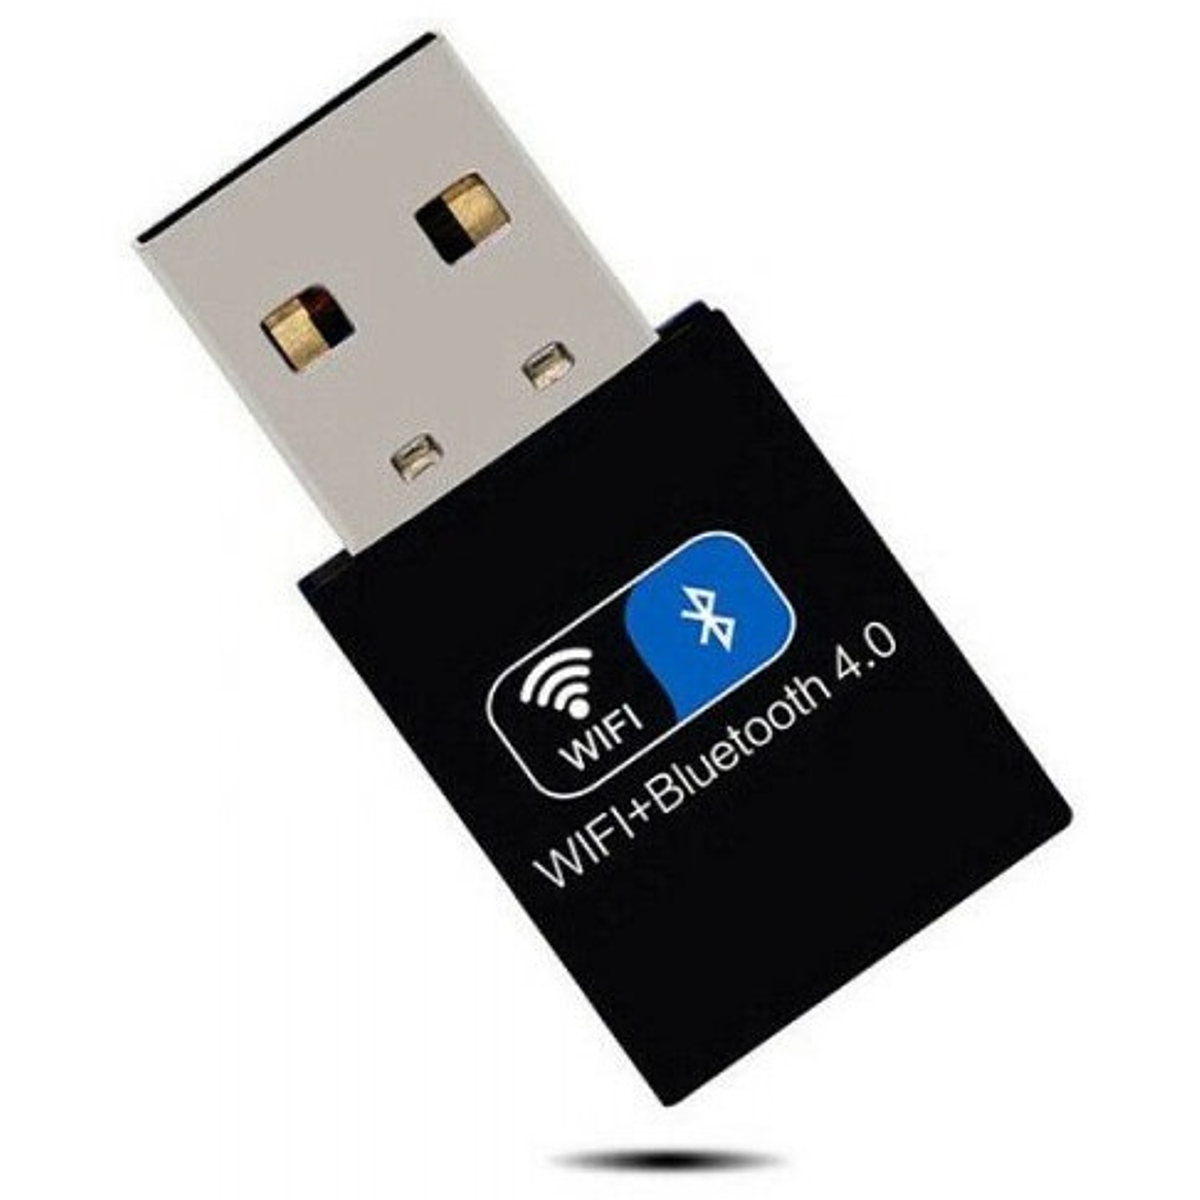 Pen USB Wi-Fi c/ Bluetooth 4.0 (Dupla Função)